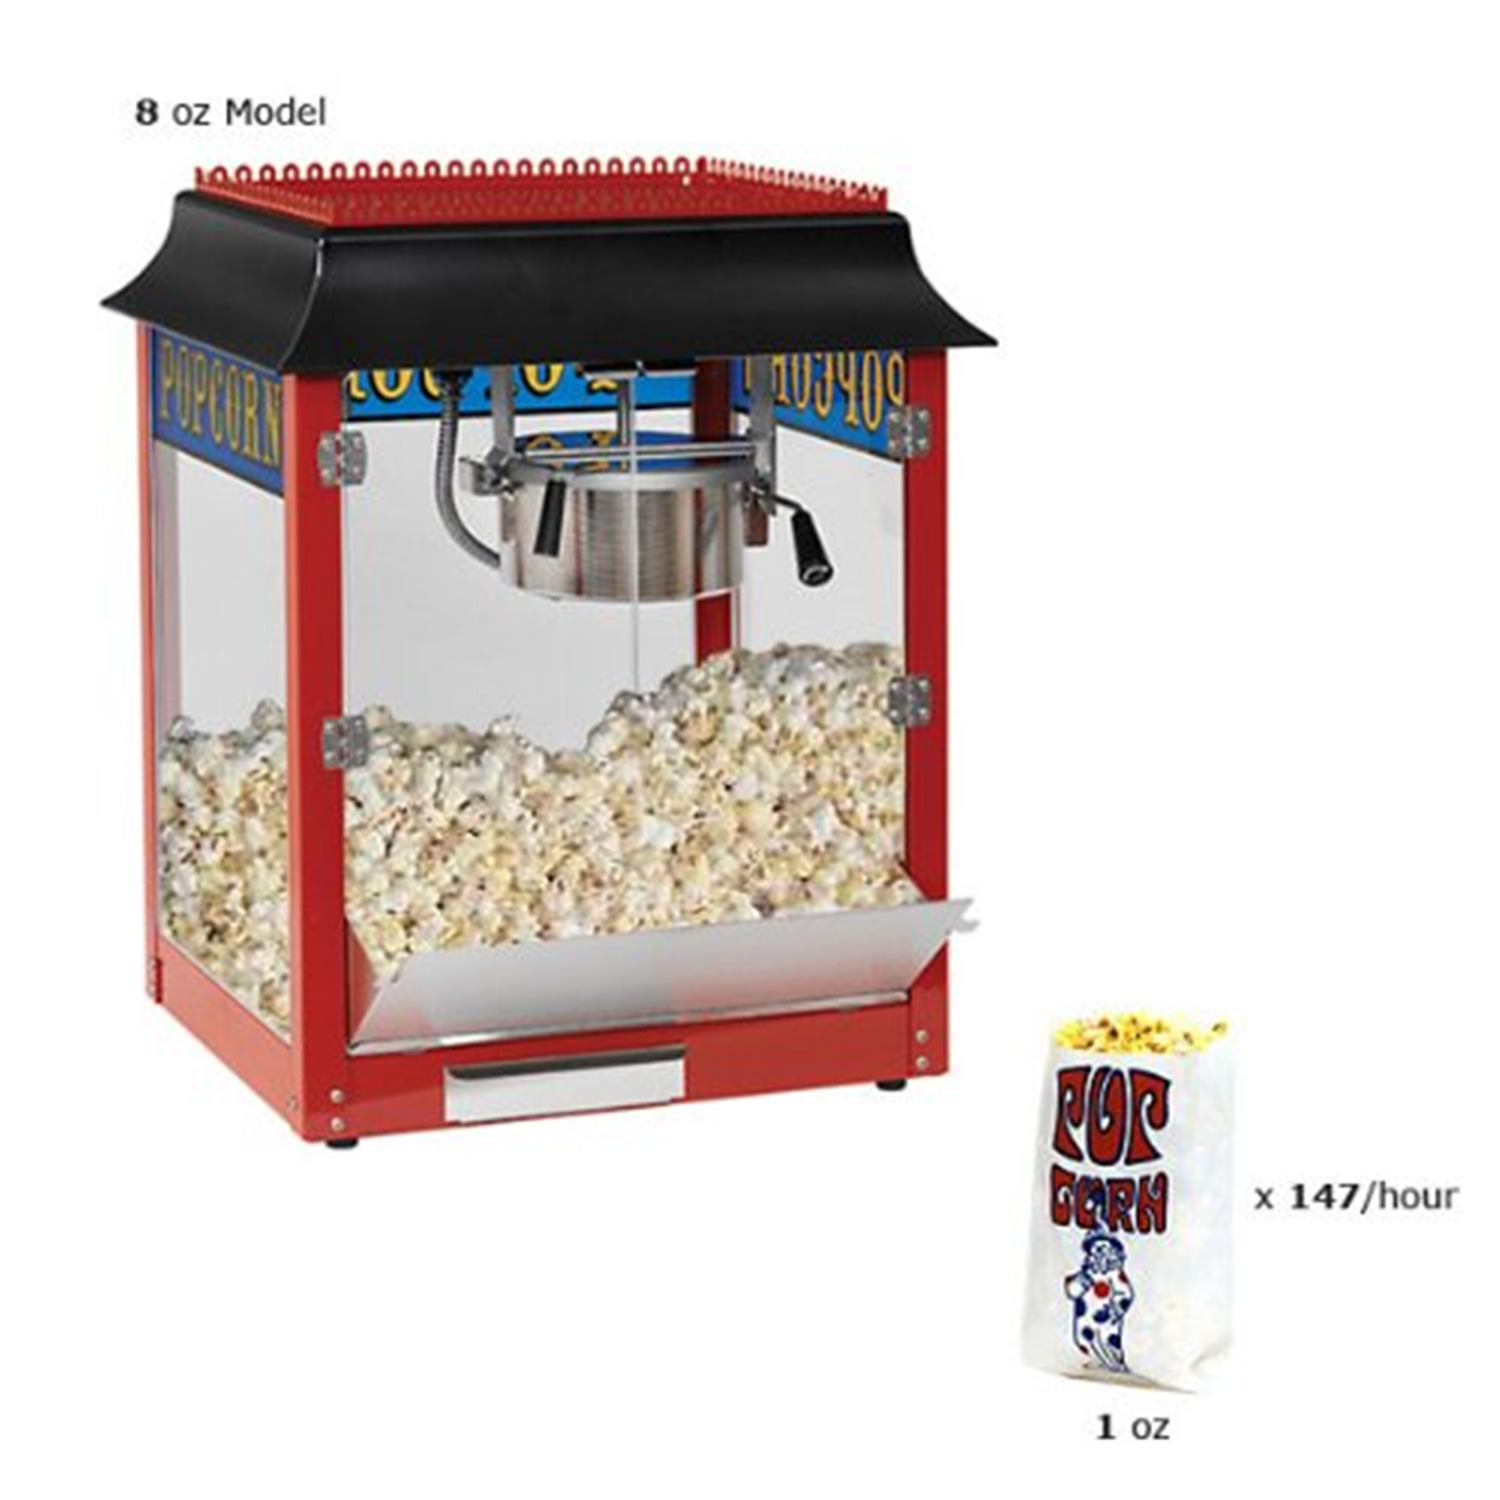 Paragon 1911 8oz Popcorn Machine - image 1 of 2